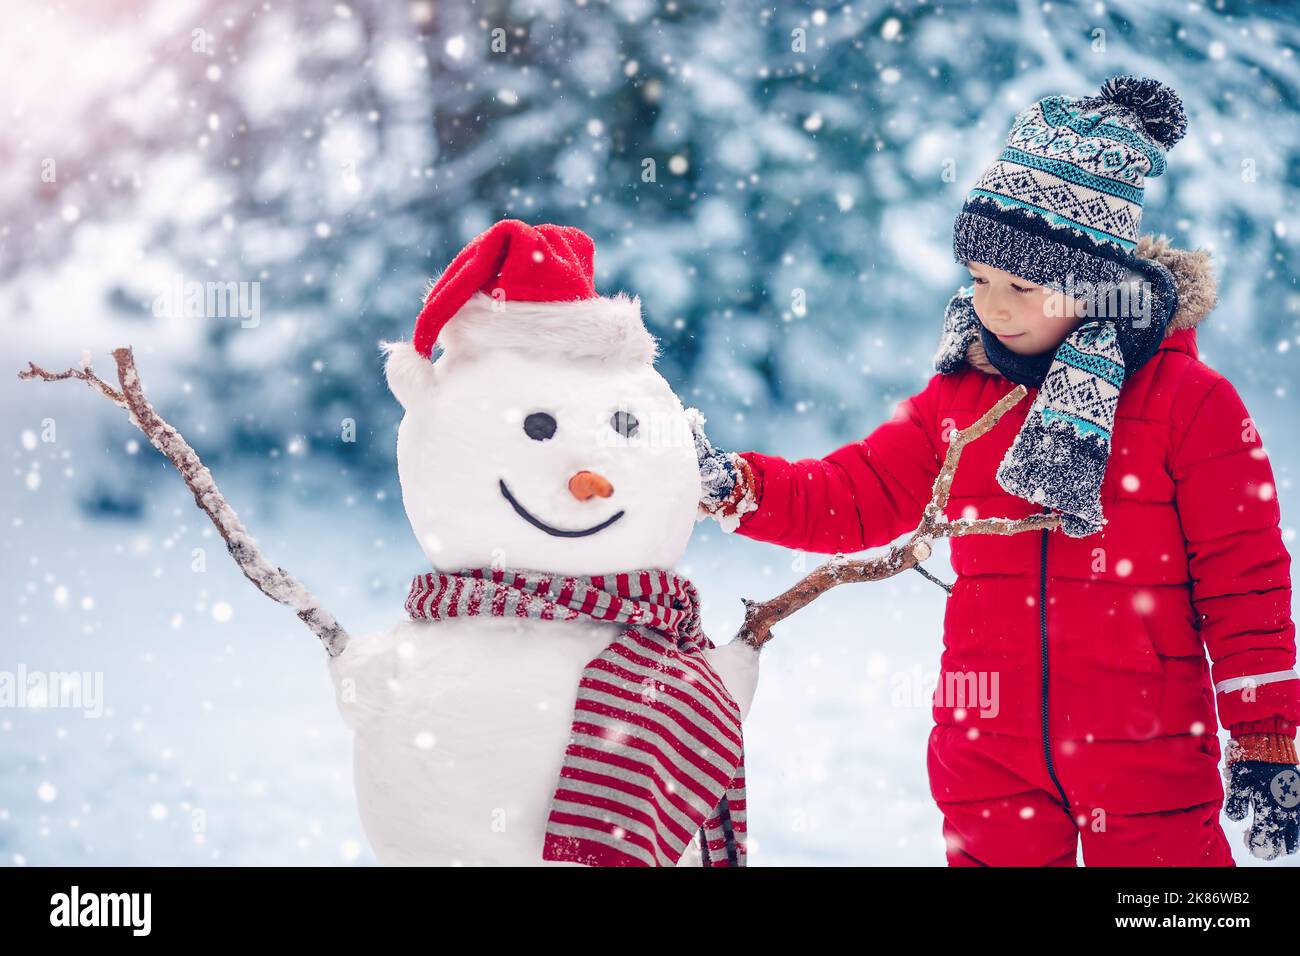 https://c8.alamy.com/comp/2K86WB2/small-smiling-child-building-a-cute-snowman-2K86WB2.jpg